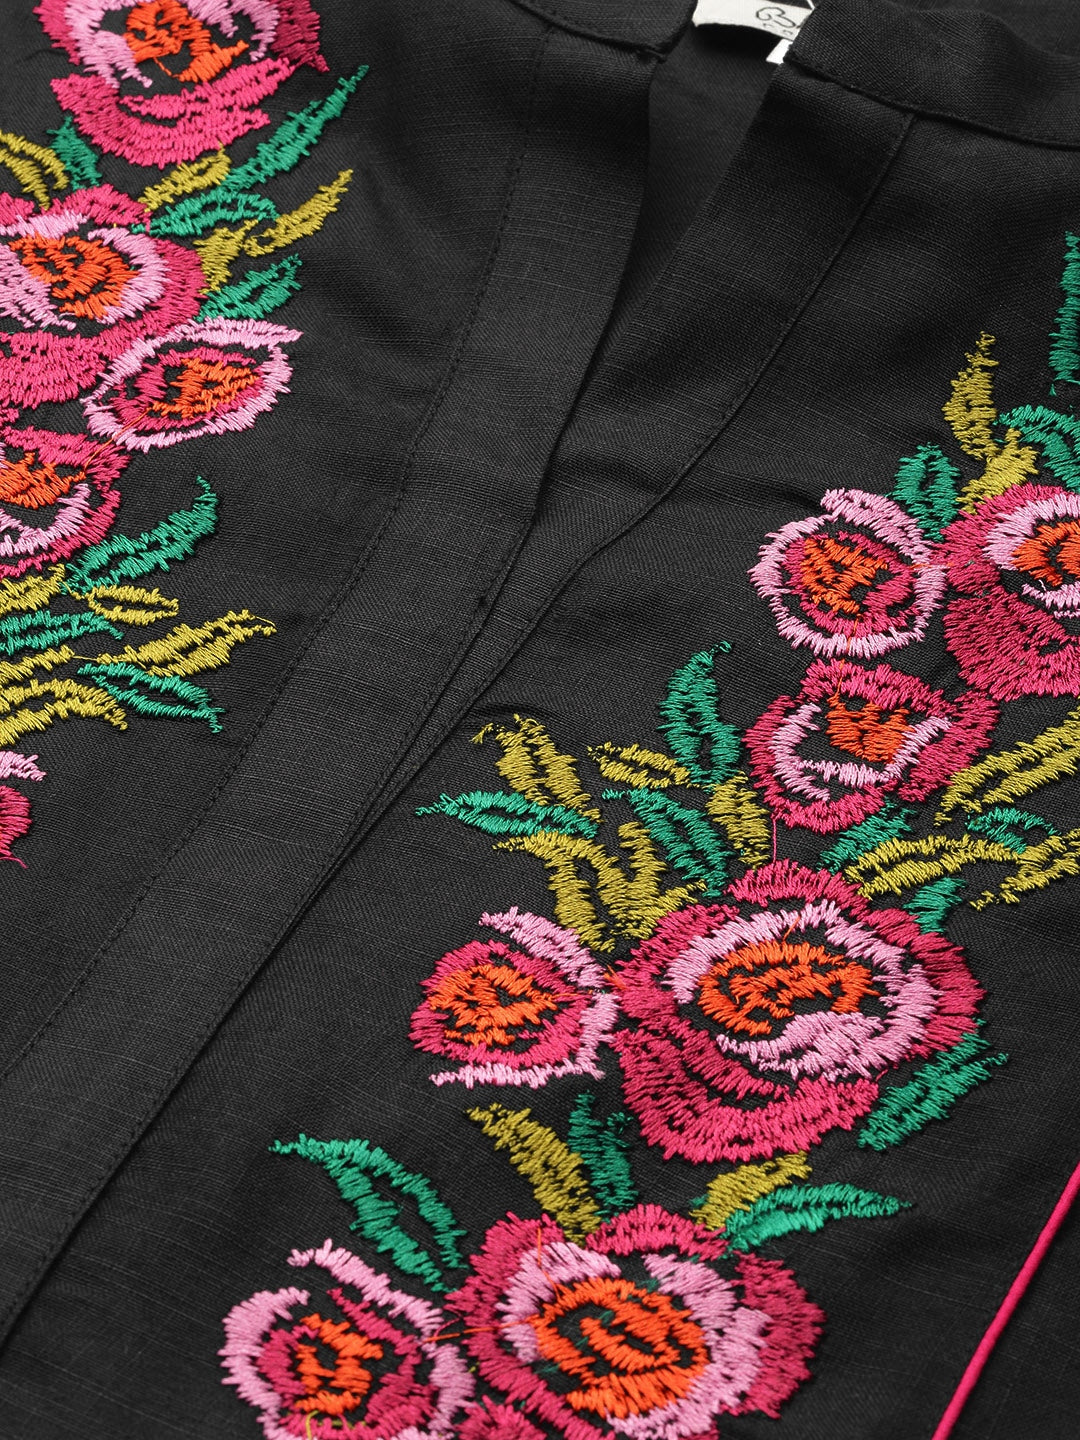 Women's Black & Pink Floral Embroidered Yoke Design Straight Kurta - Bhama Couture